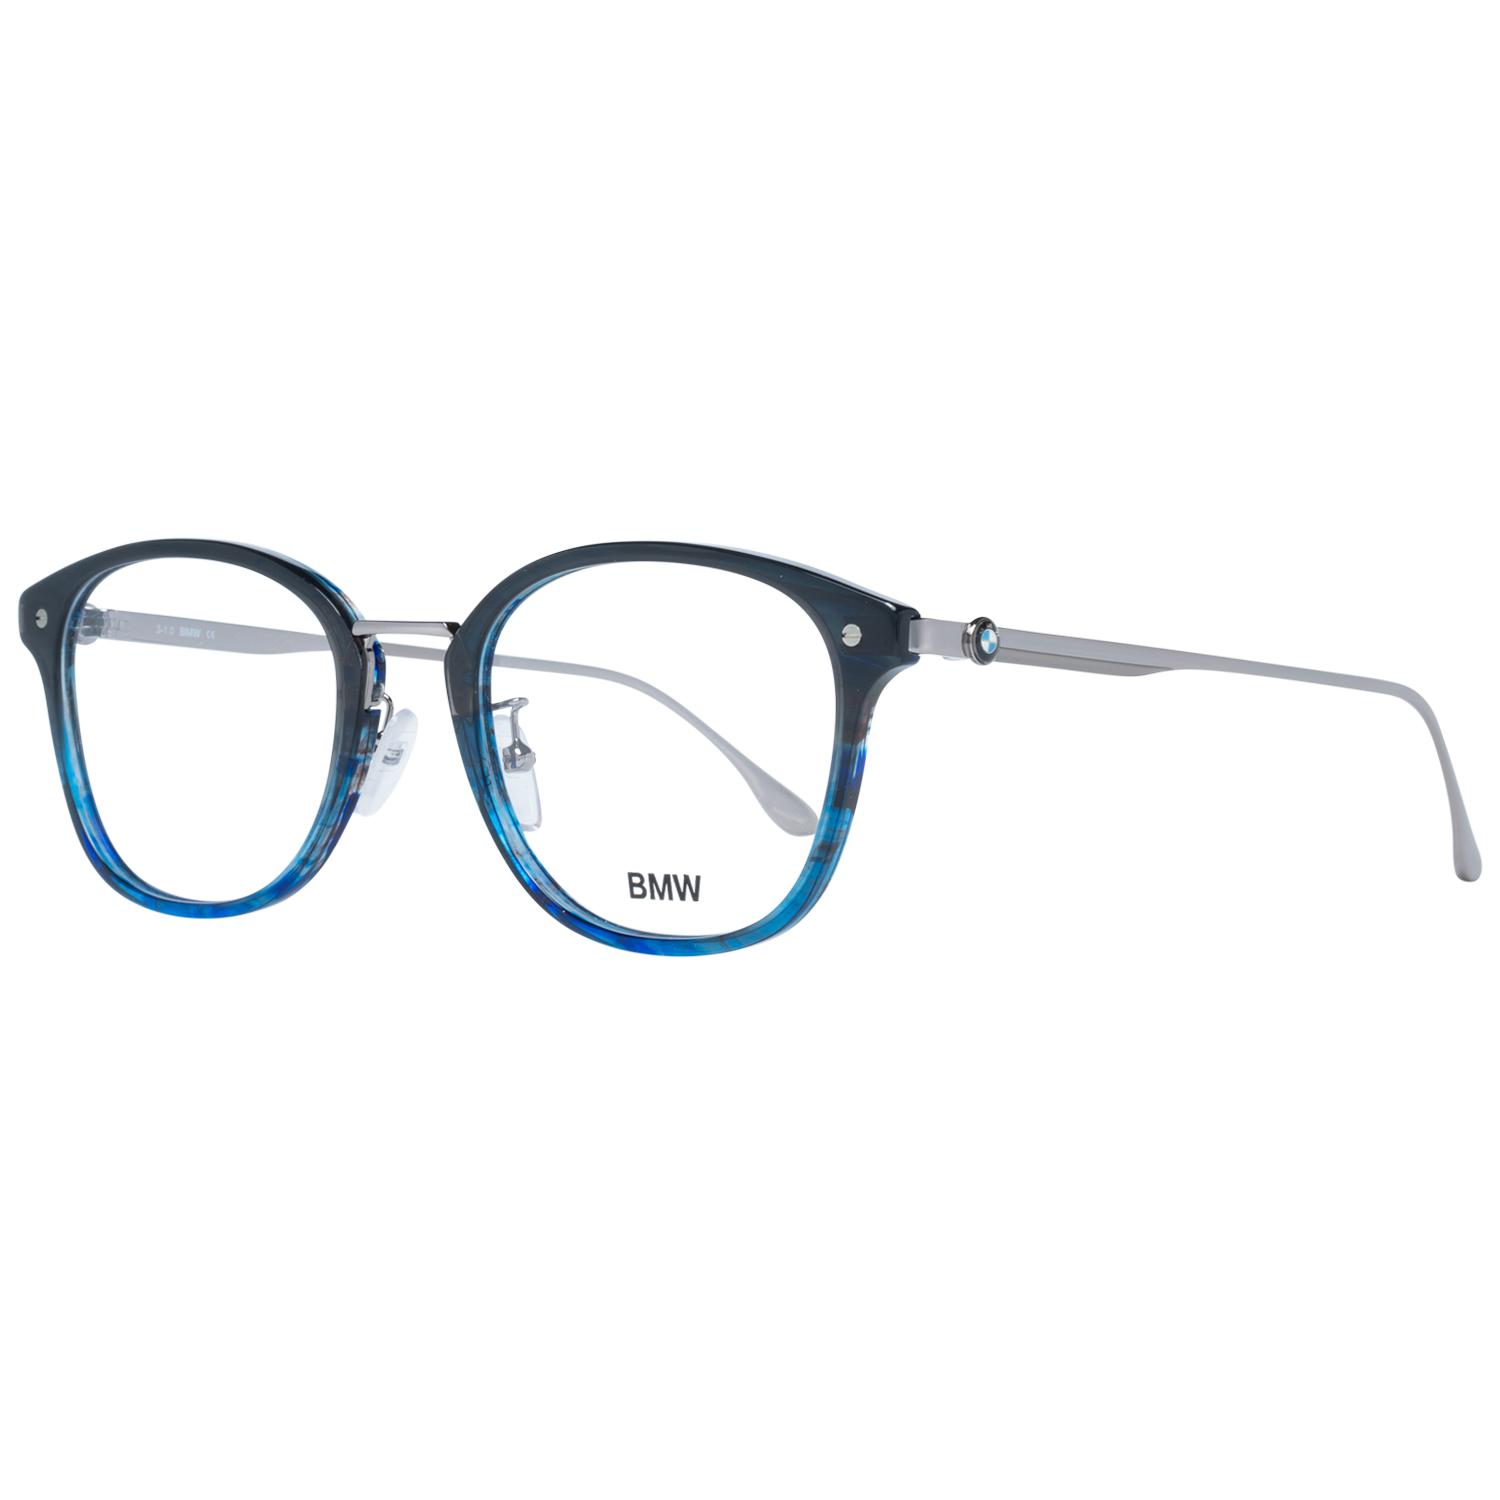 BMW Frames BMW Optical Frame Eyeglasses BW5013 092 53 Eyeglasses Eyewear UK USA Australia 